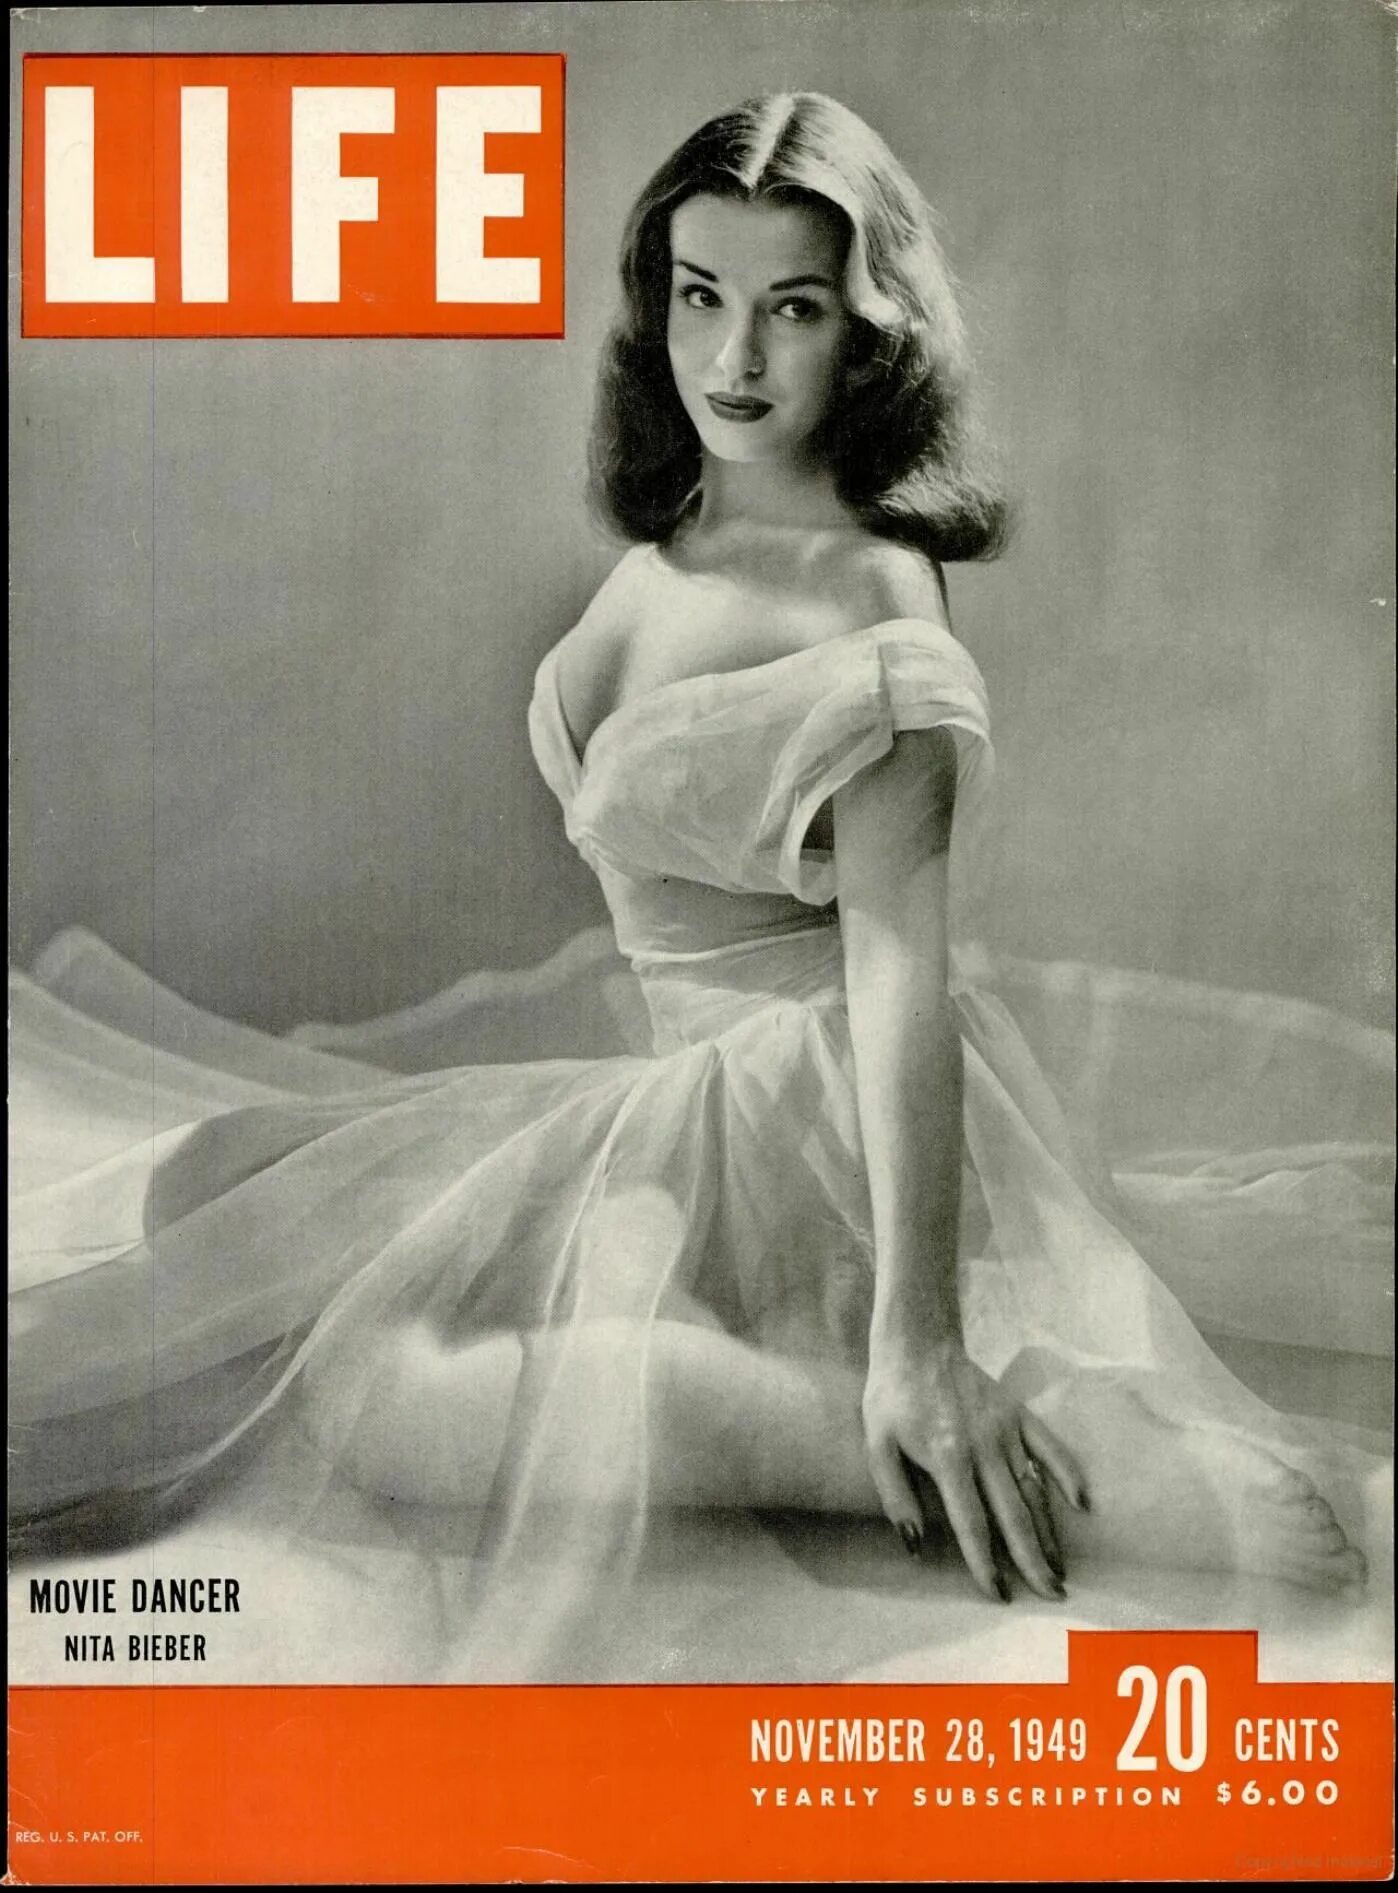 Обложки журнала лайф. Обложка Life Magazine. Последняя обложка журнала Life. Первая обложка журнала Life. Life magazine